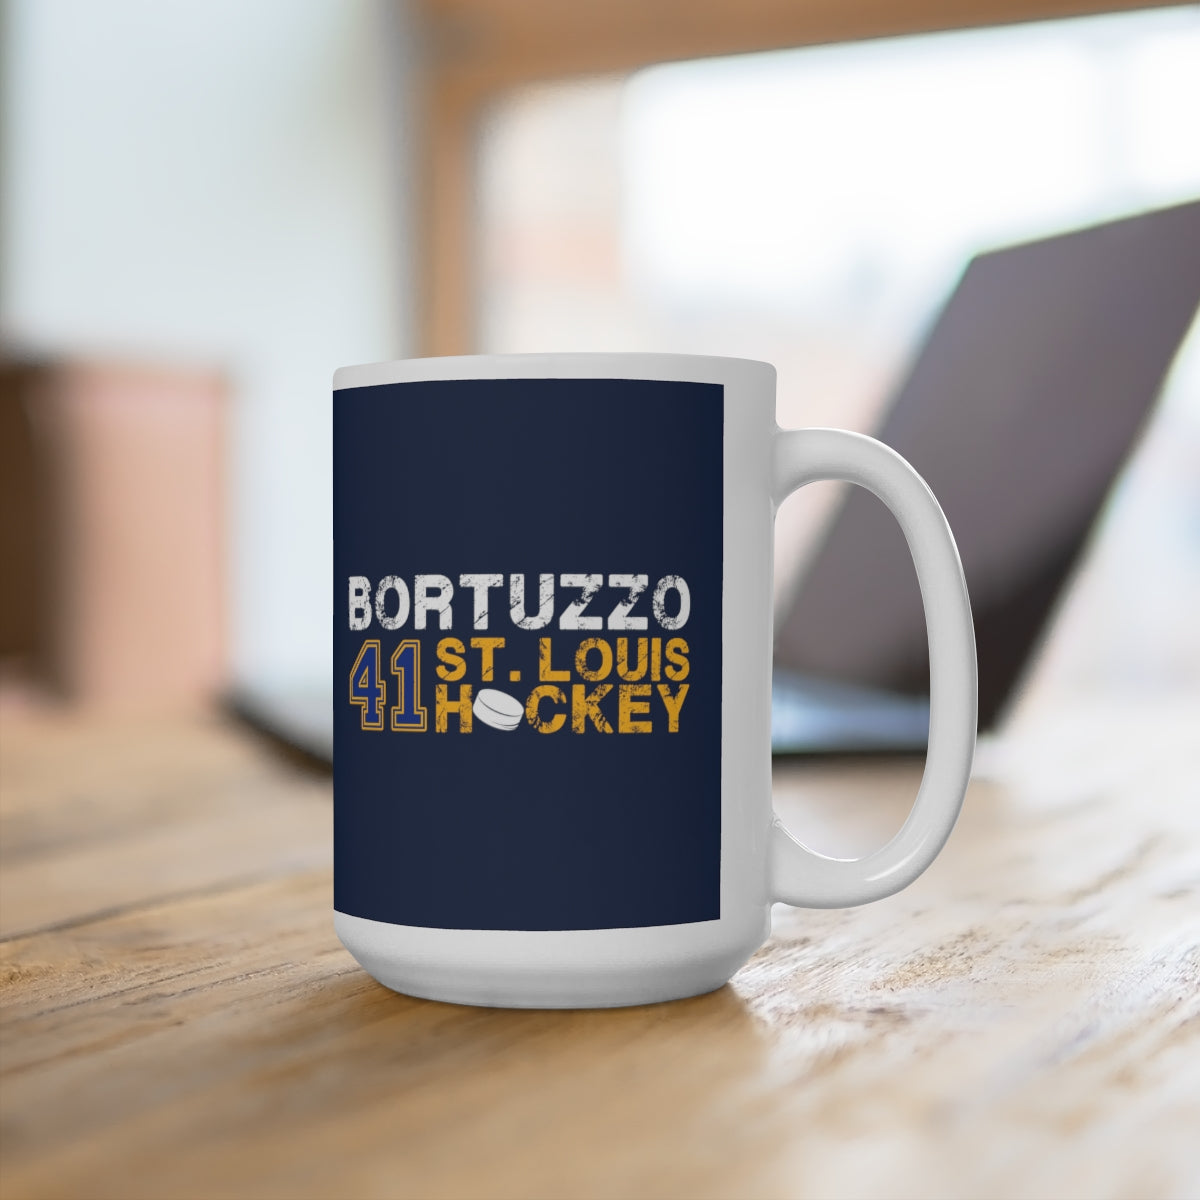 Bortuzzo 41 St. Louis Hockey Ceramic Coffee Mug In Navy, 15oz